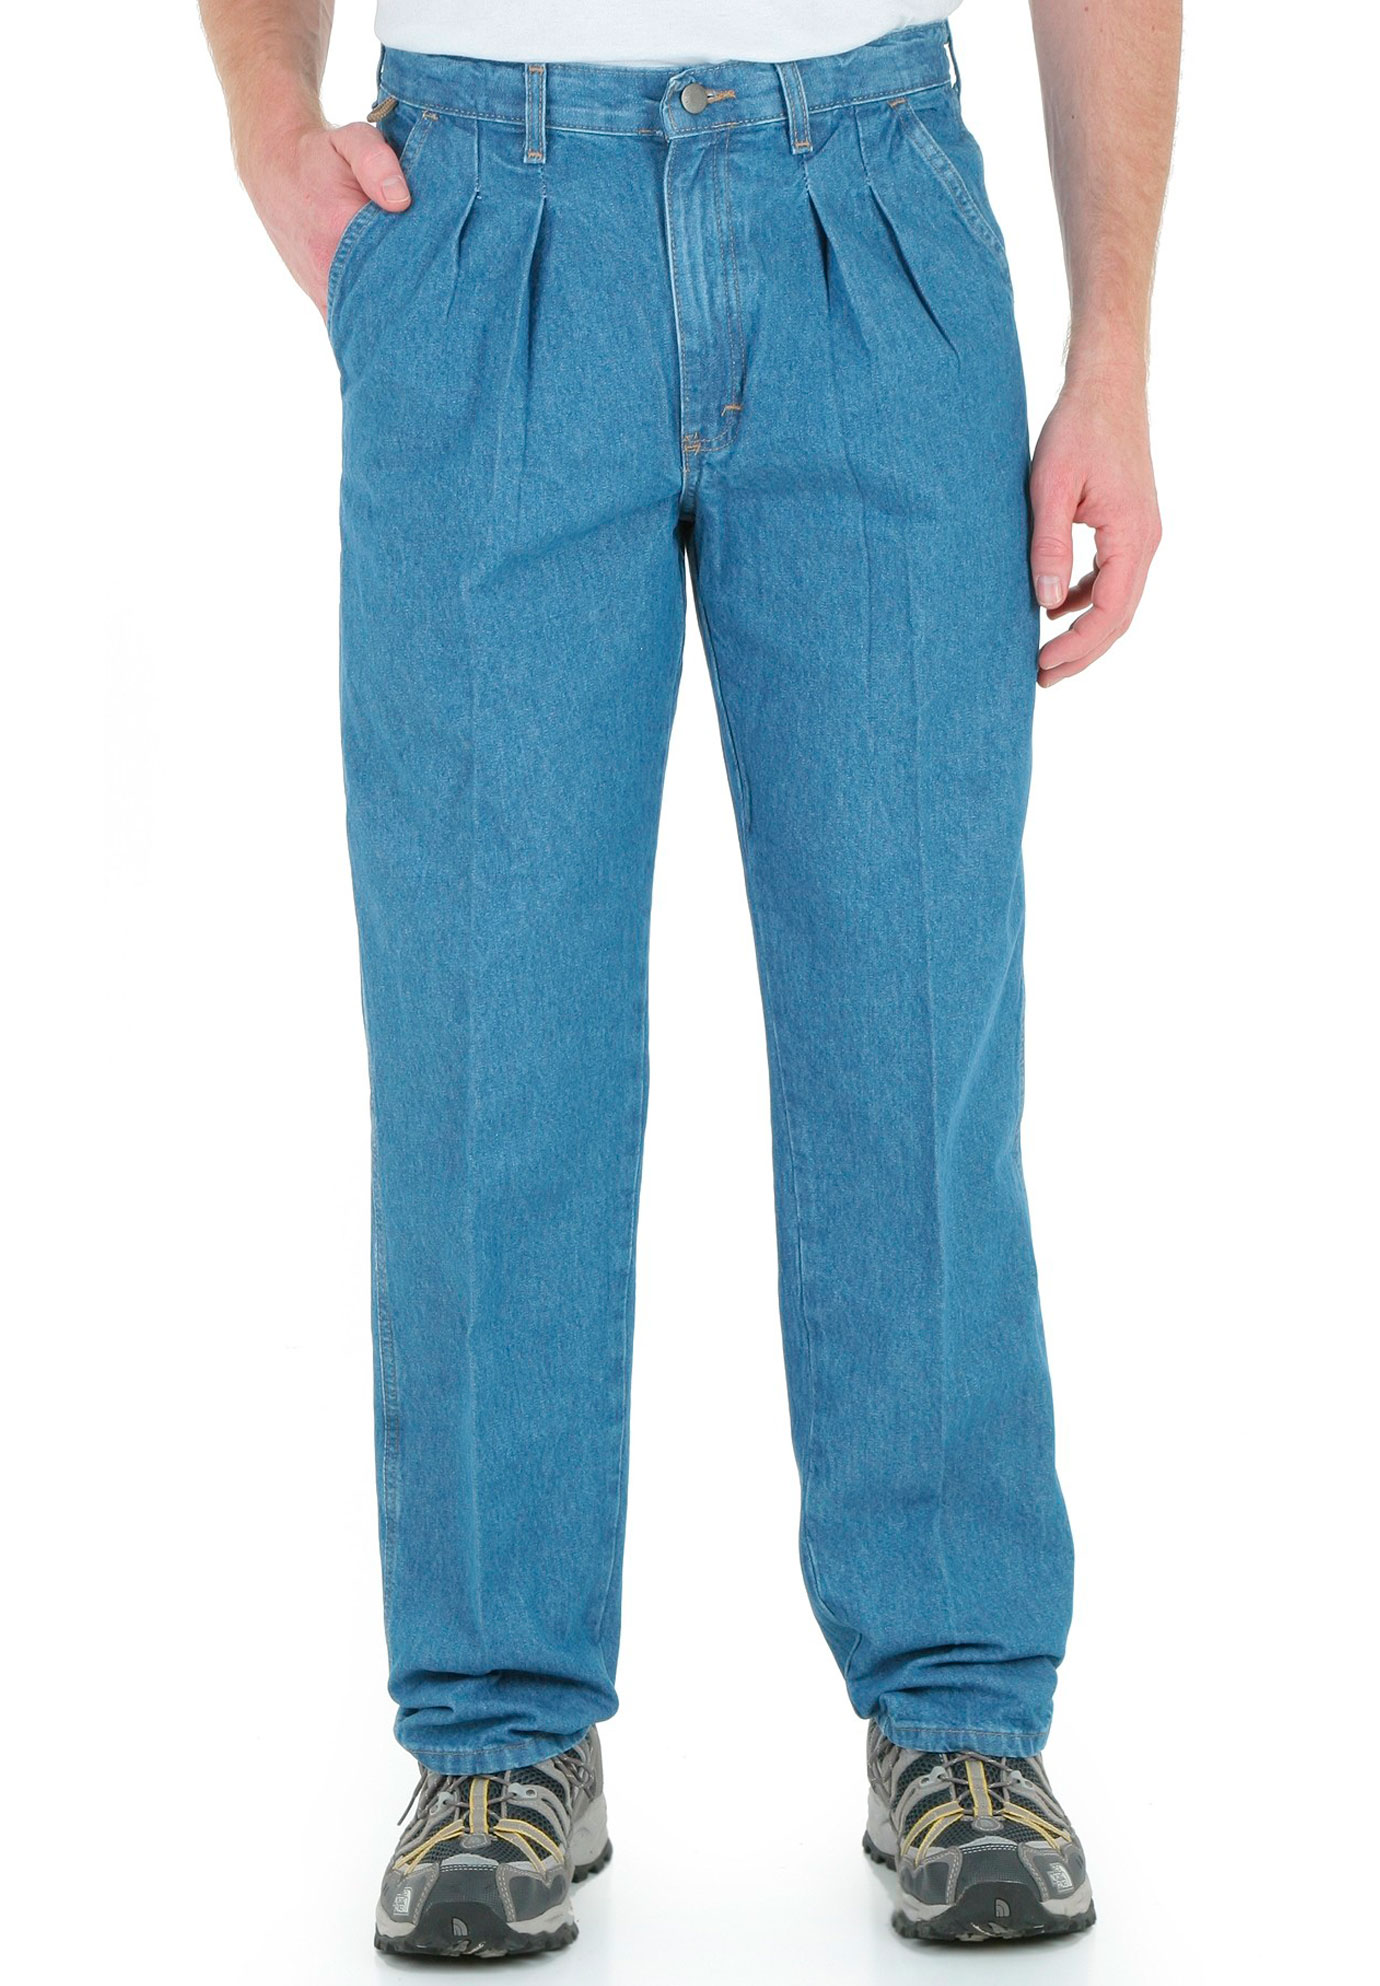 wrangler jeans with elastic waistband